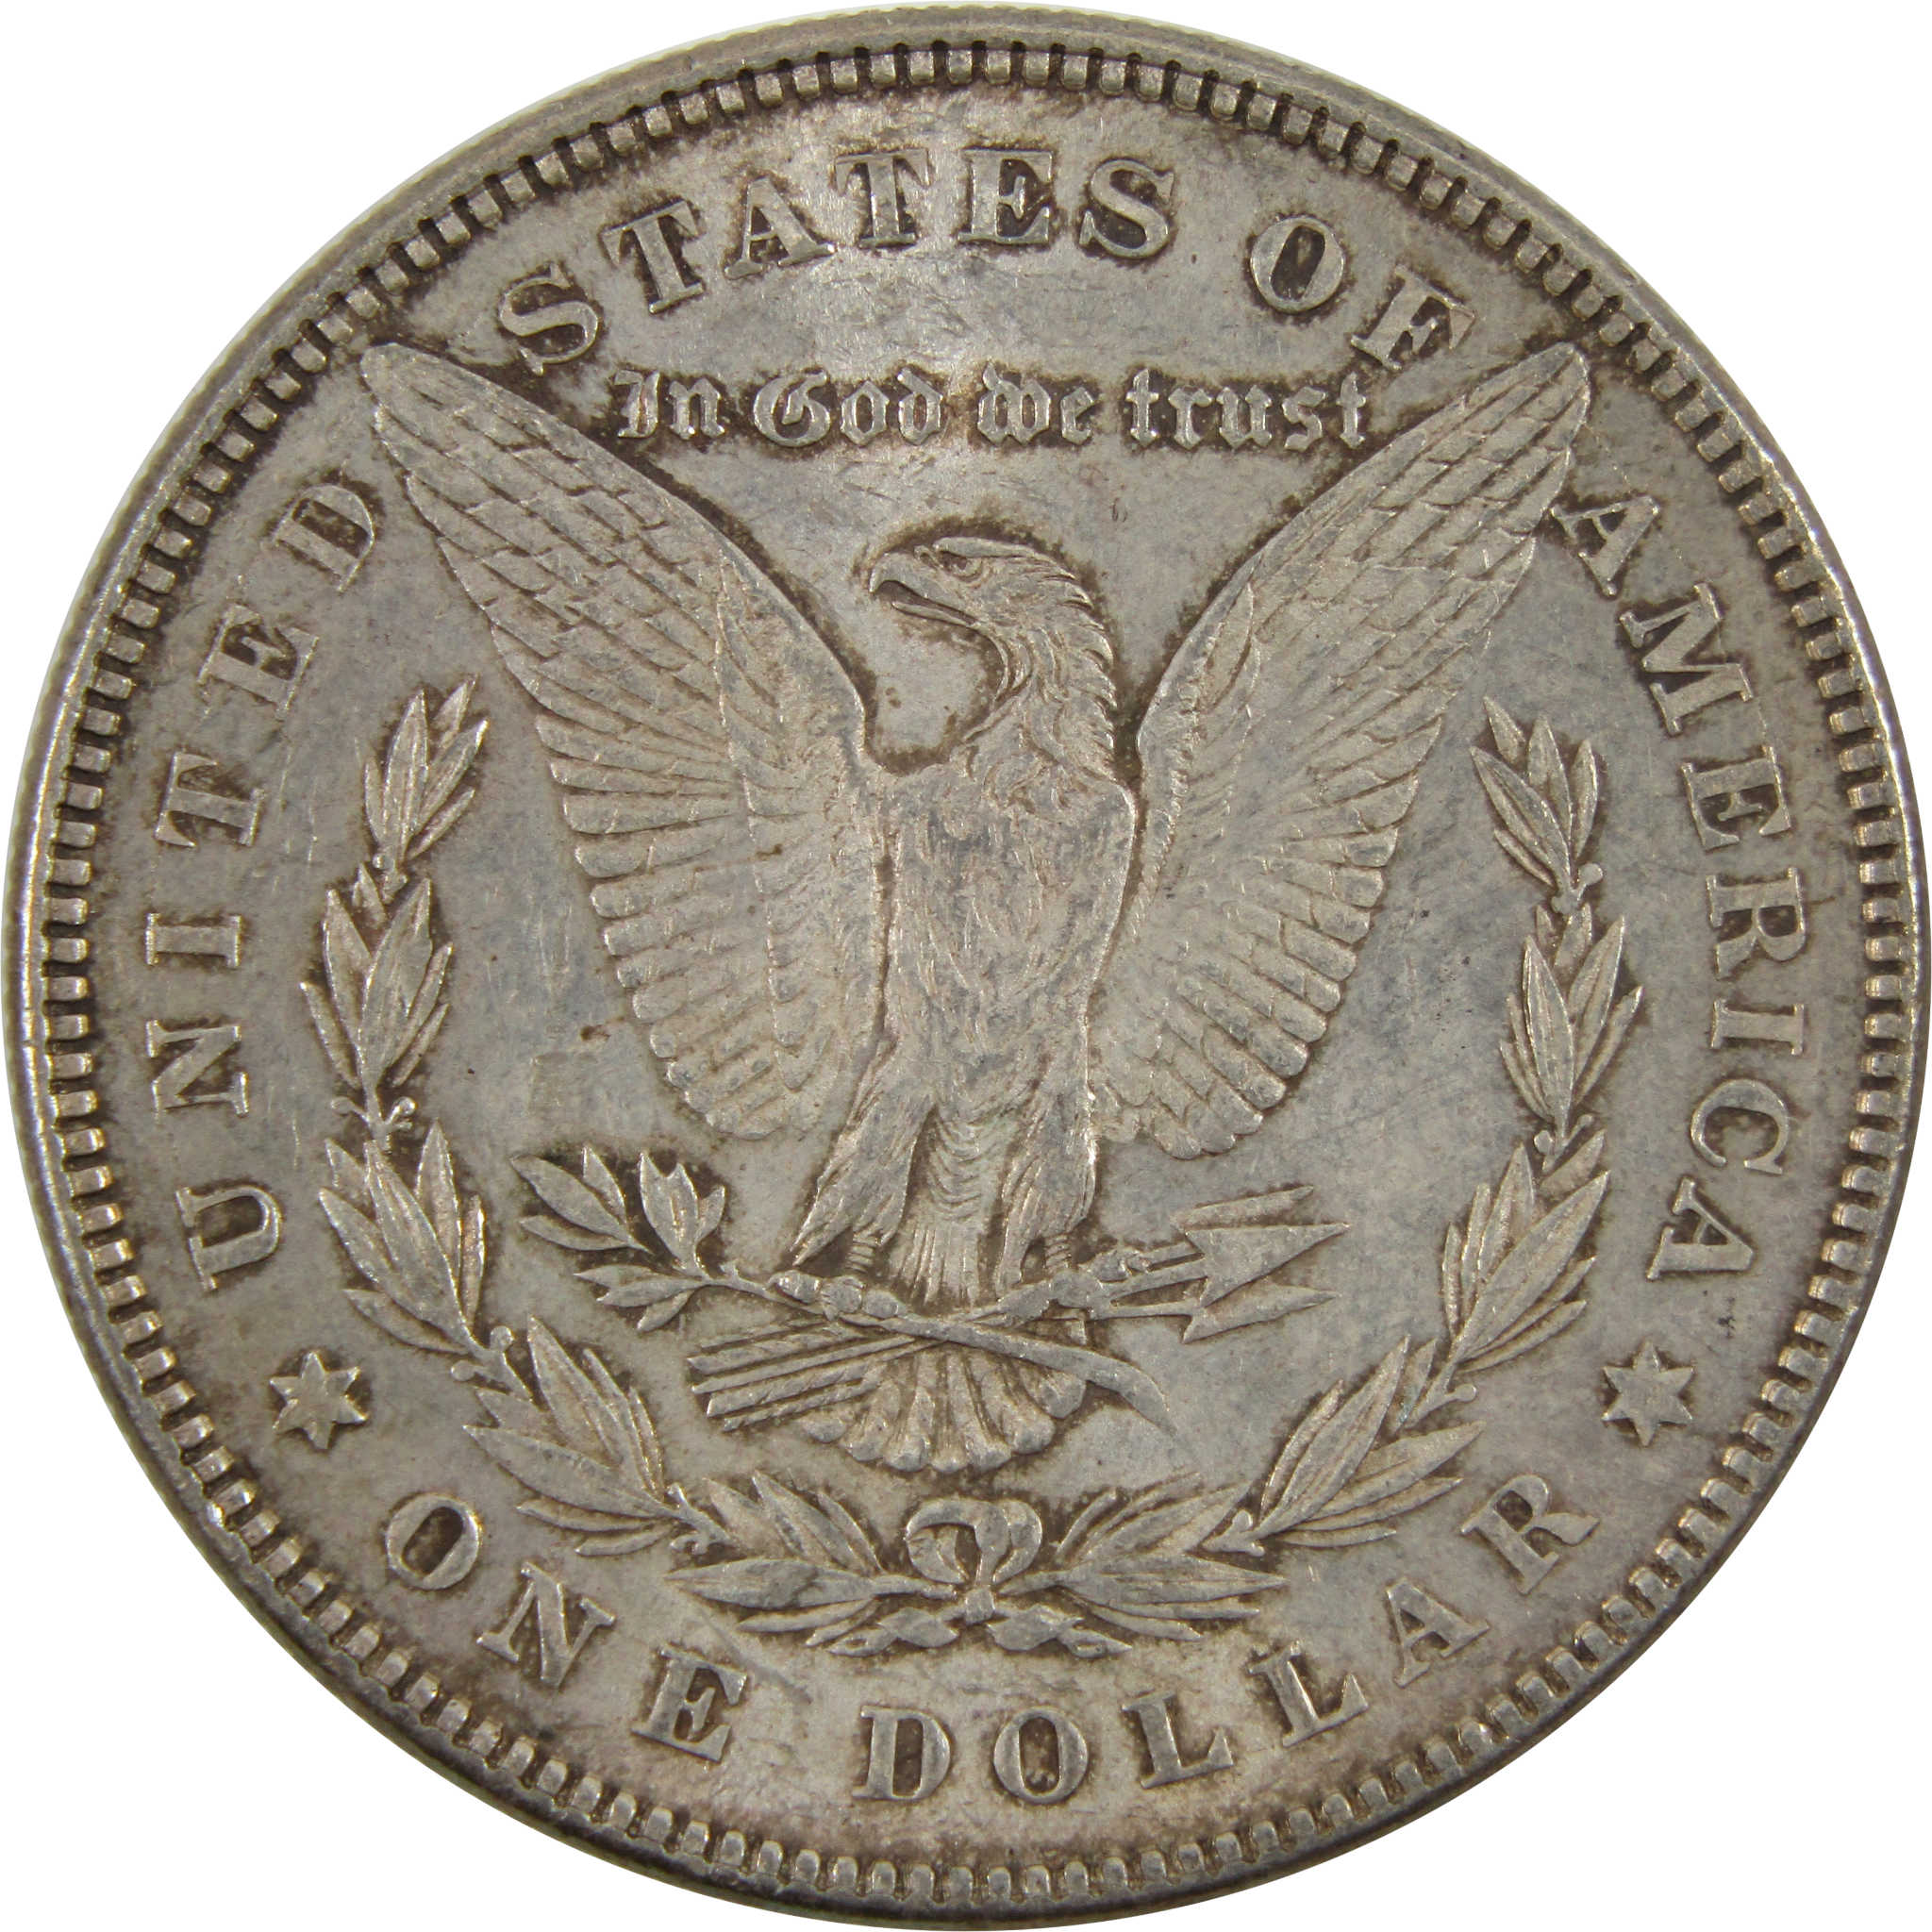 1878 7TF Rev 78 Morgan Dollar Borderline Unc 90% Silver SKU:I7639 - Morgan coin - Morgan silver dollar - Morgan silver dollar for sale - Profile Coins &amp; Collectibles